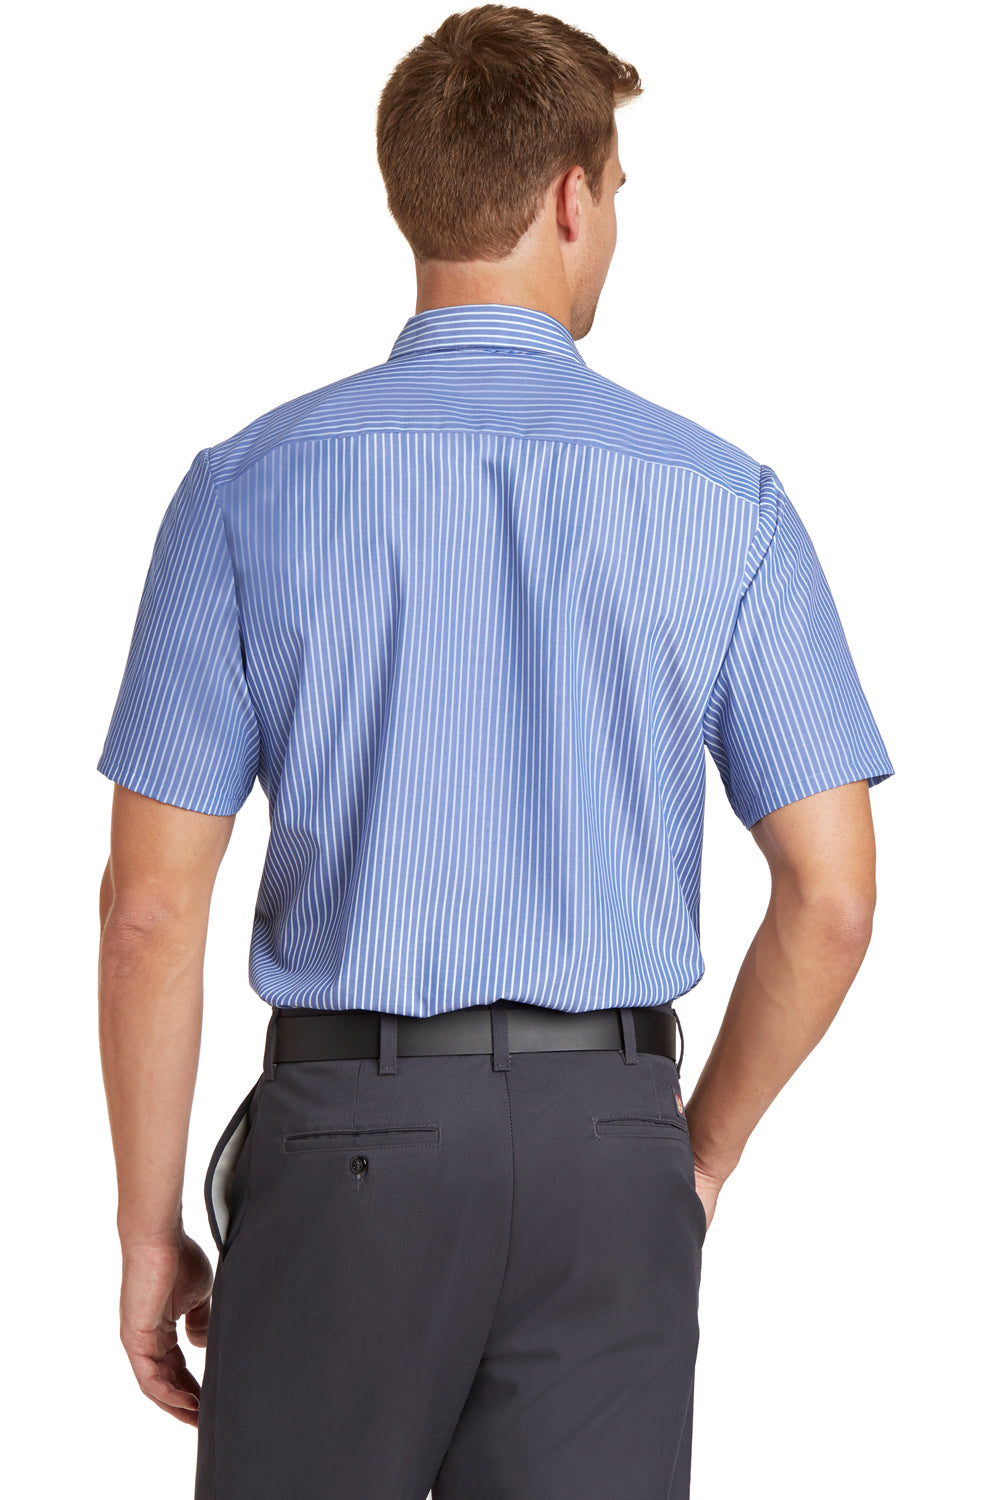 Red Kap CS20/CS20LONG Mens Industrial Moisture Wicking Short Sleeve Button Down Shirt w/ Double Pockets Blue/White Back